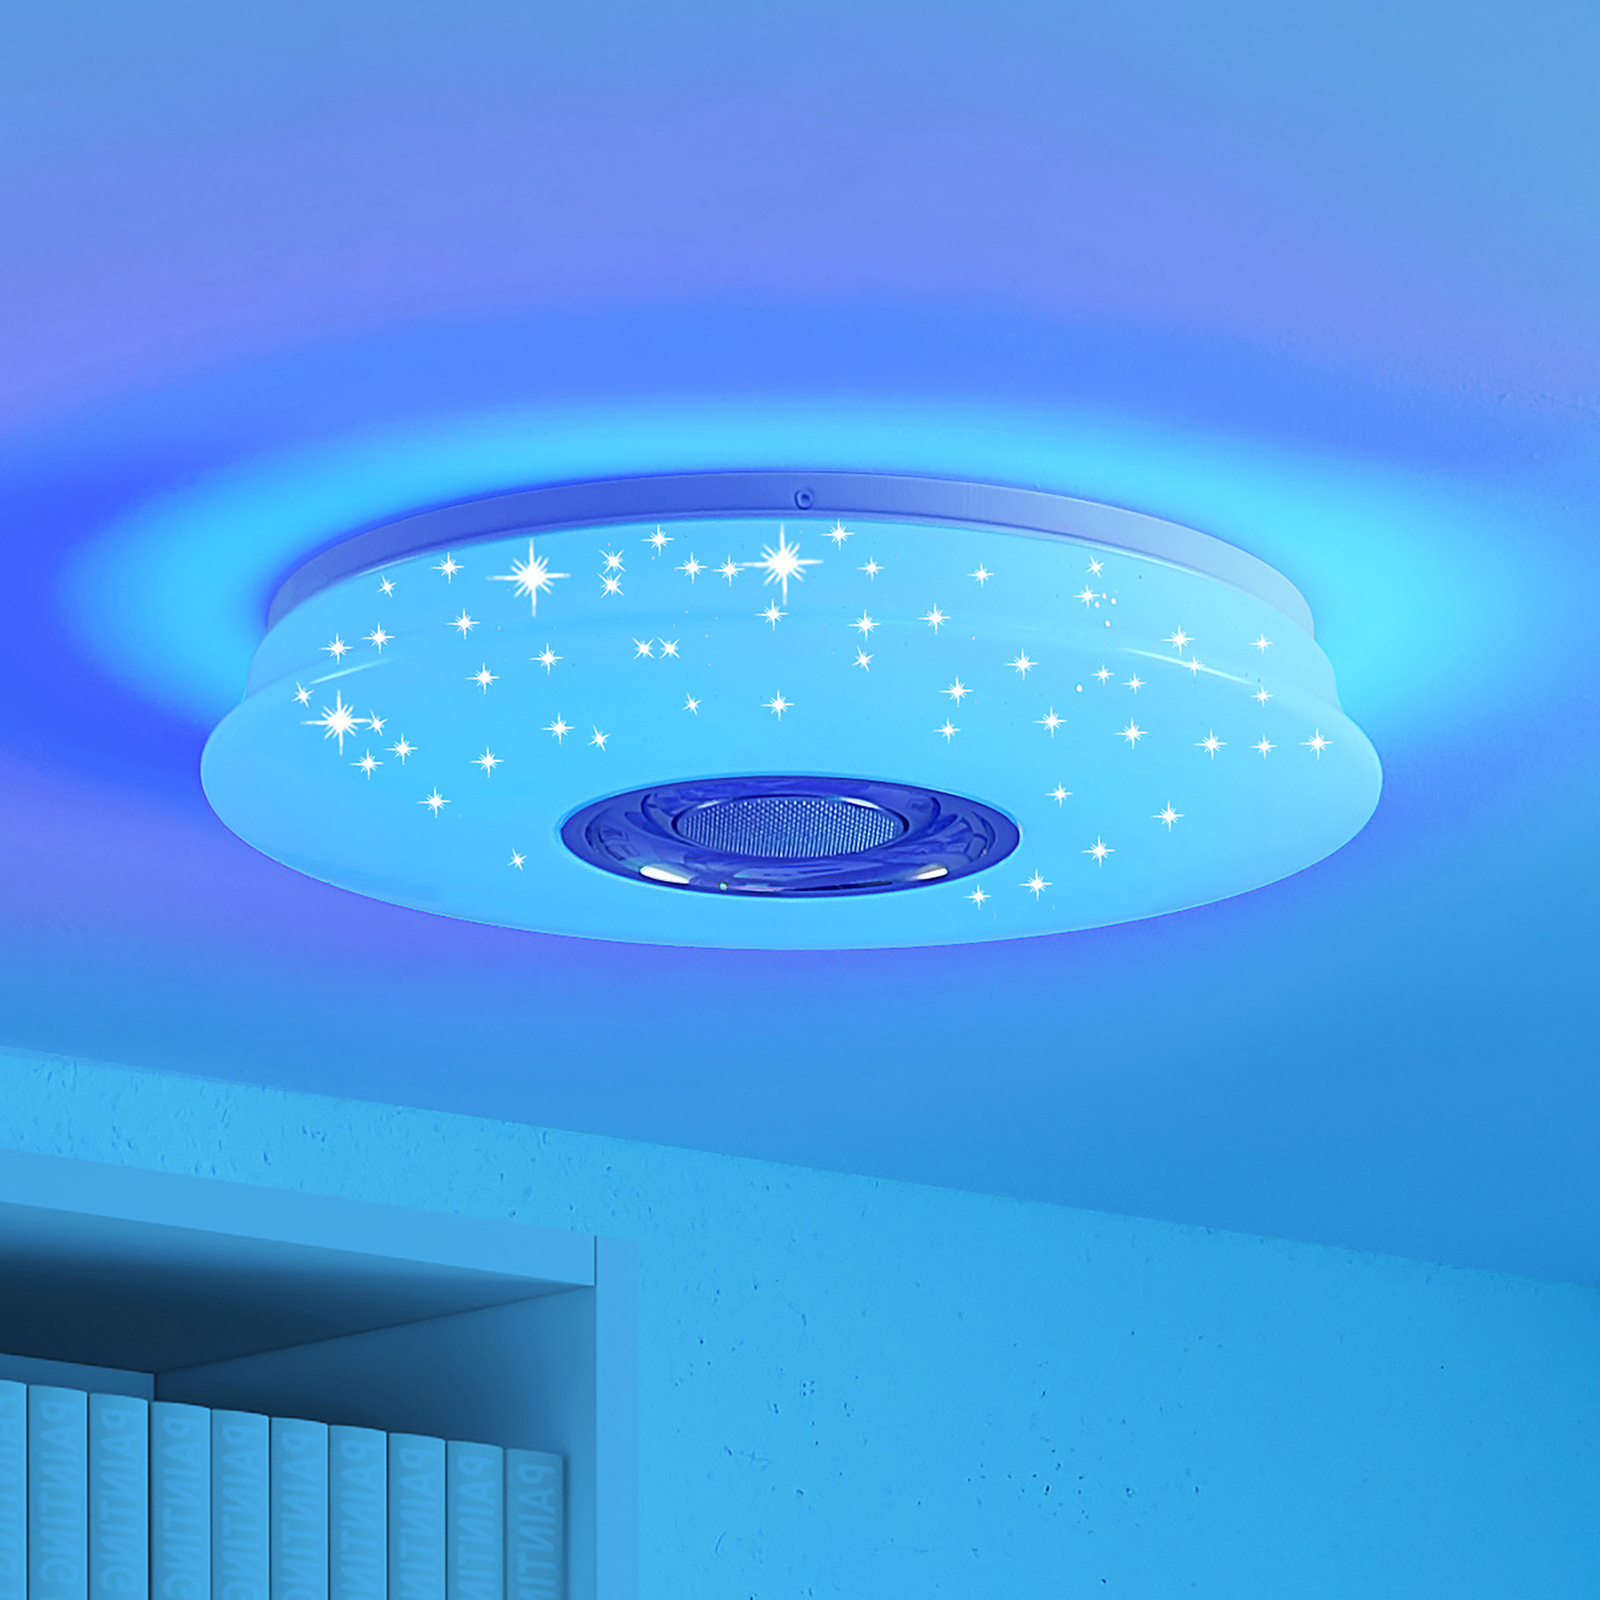 Elpida LED plafondlamp met luidspreker | Lampen24.nl